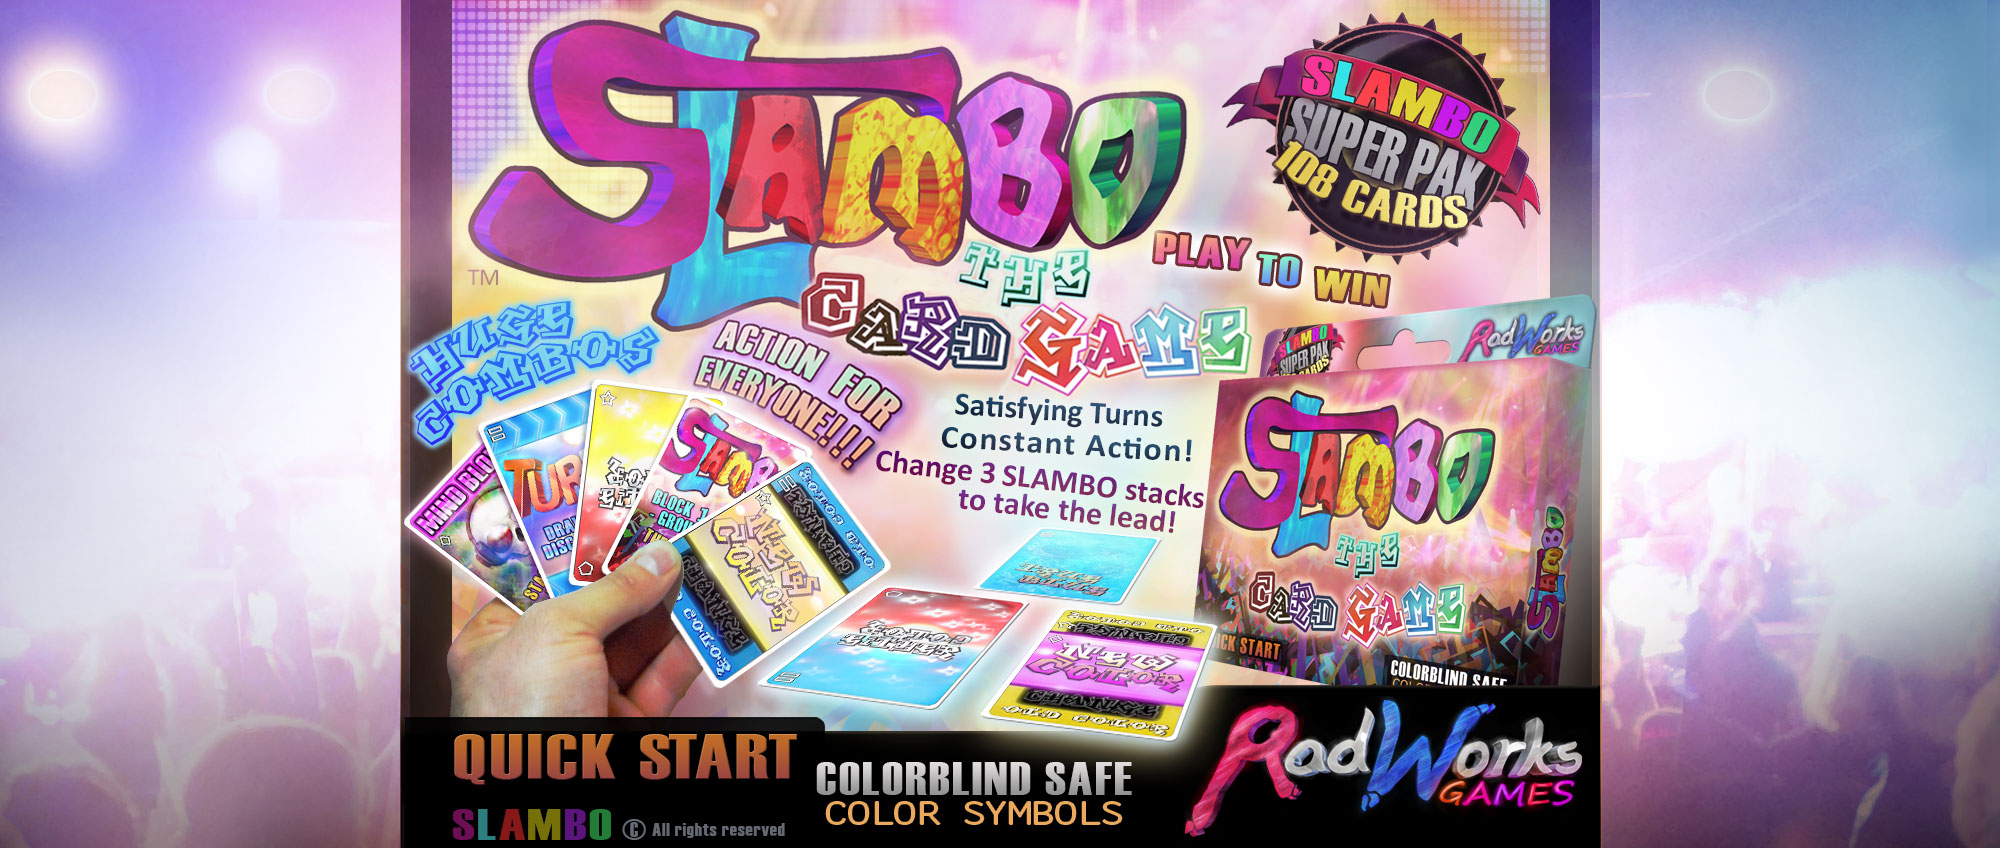 SLAMBO-CARD-GAME-header-2